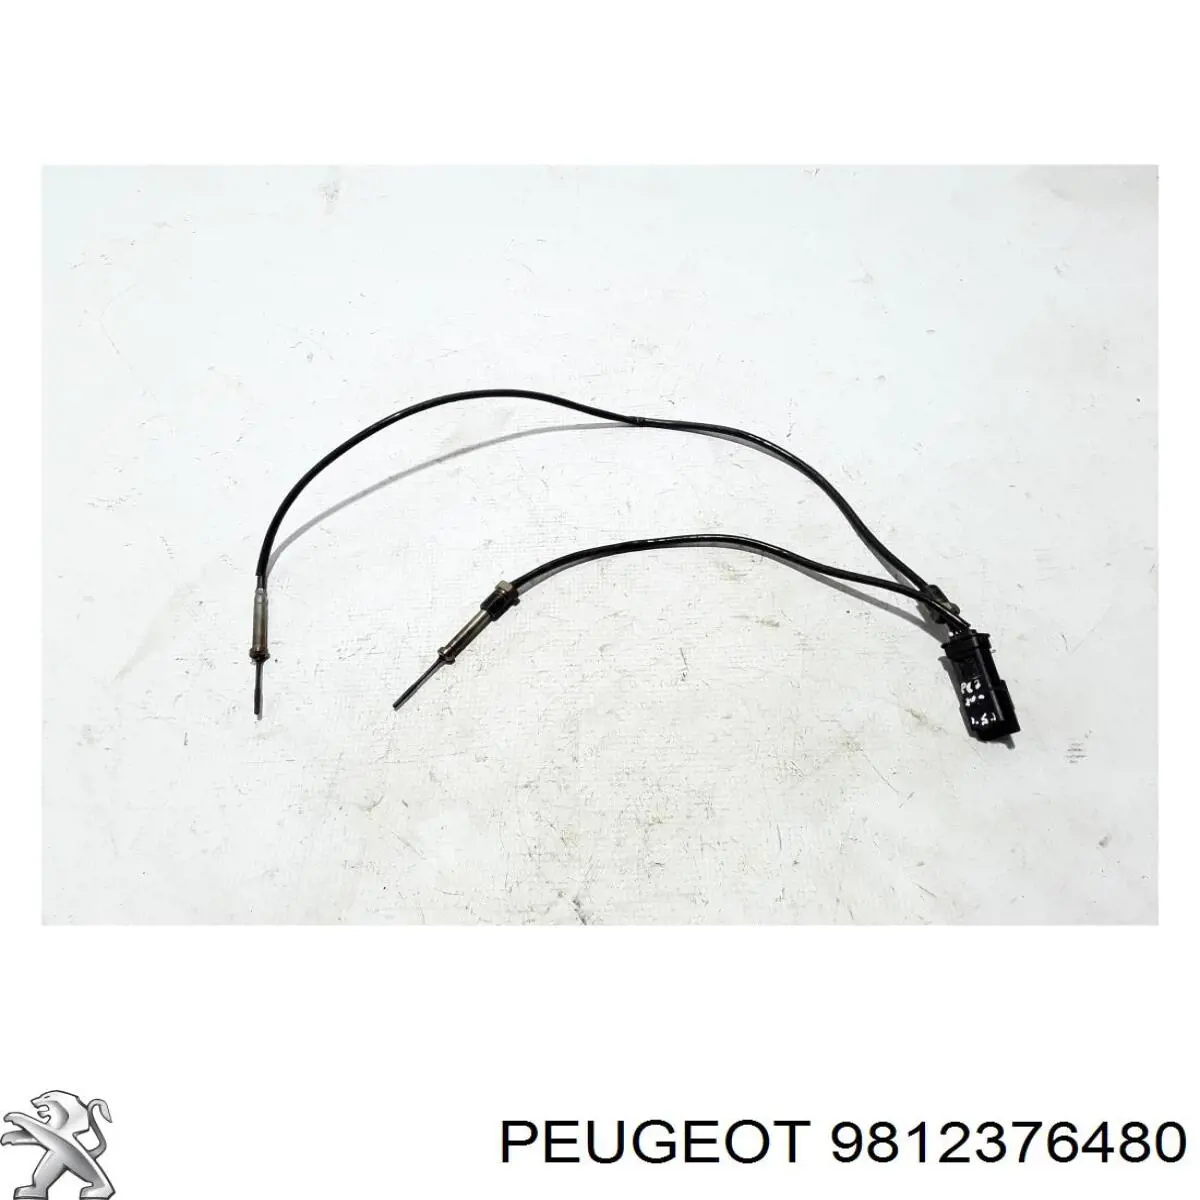 Sensor de temperatura, gas de escape, Filtro hollín/partículas para Peugeot 508 (FB, FH, F3)